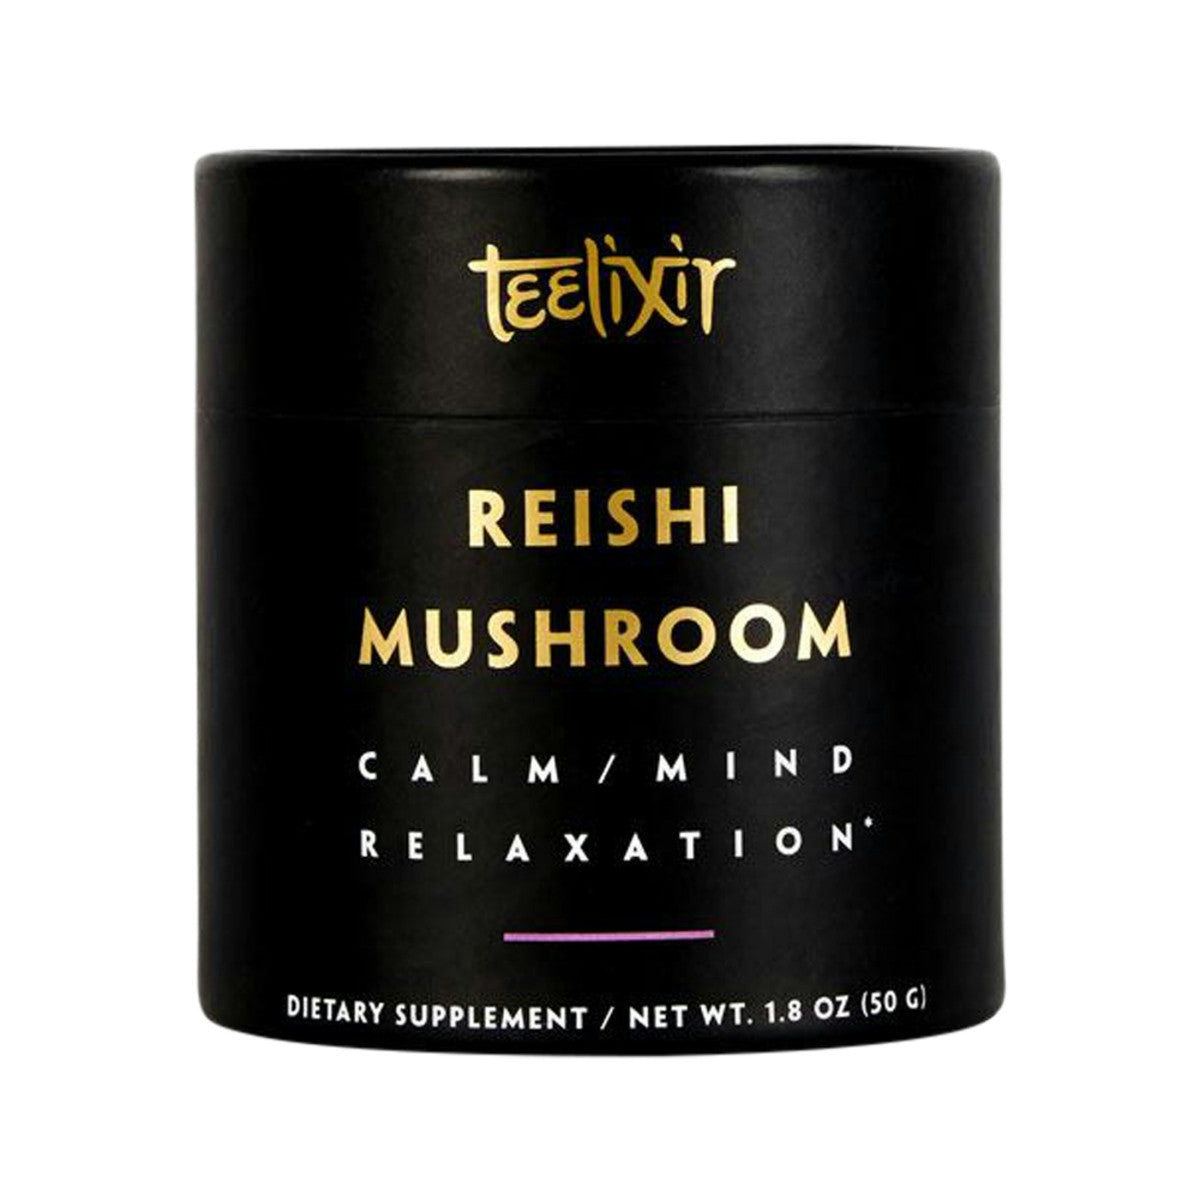 image of Teelixir Organic Reishi Mushroom (Calm/Mind Relaxation) 50g on white background